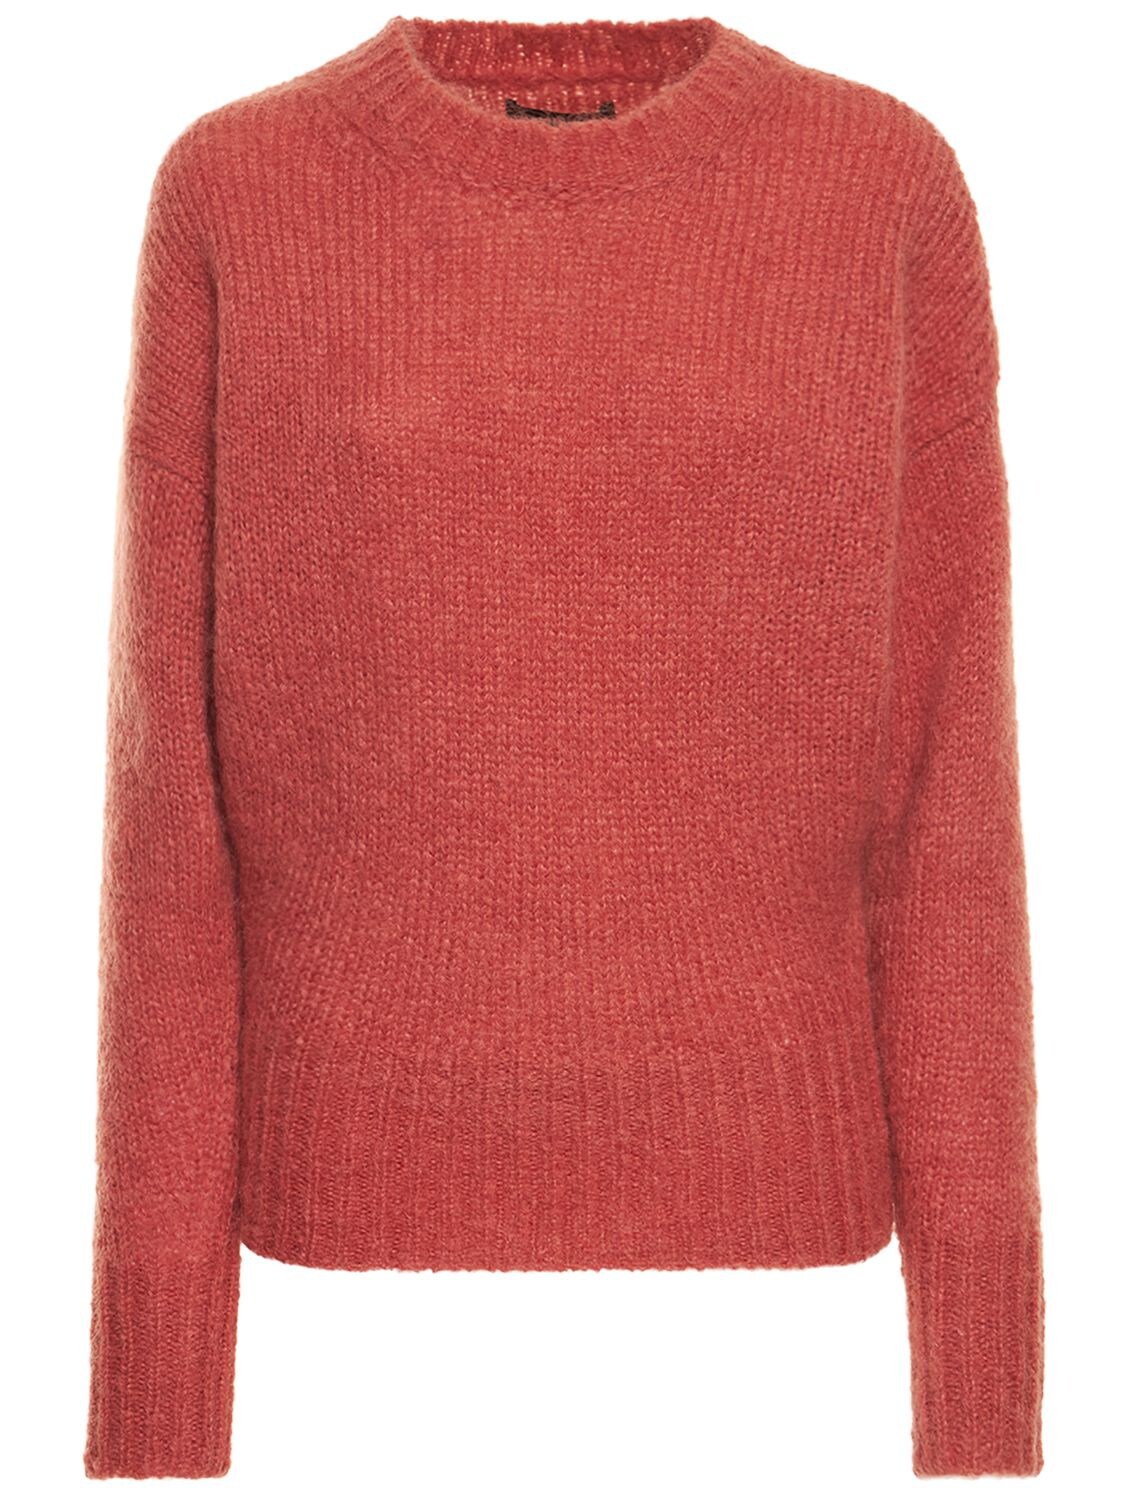 ISABEL MARANT Estelle Knit Mohair Blend Sweater